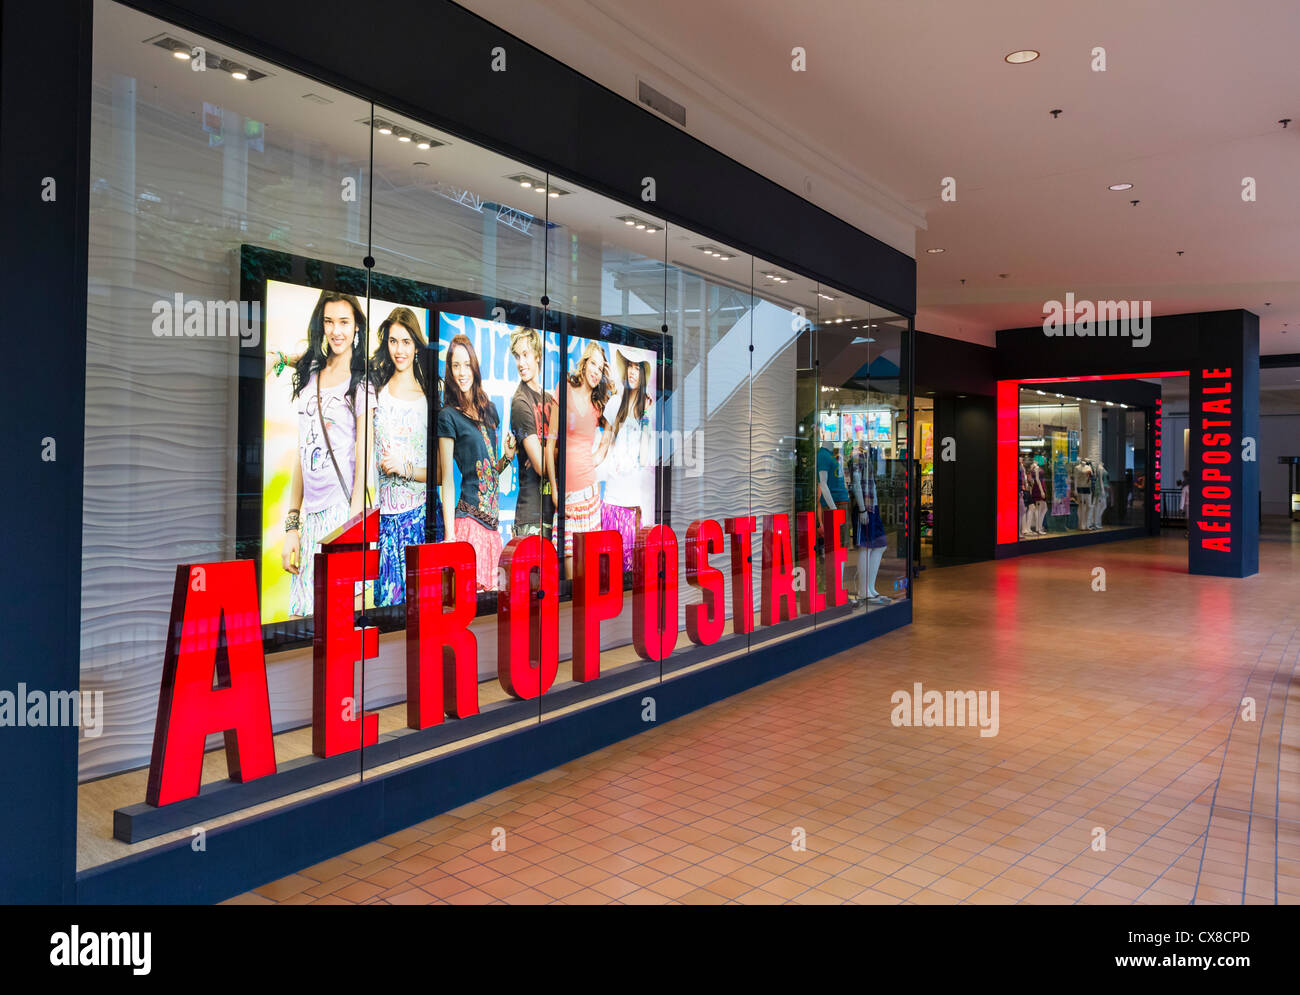 Aeropostale store in the Mall of America, Bloomington, Minneapolis, Minnesota, USA Stock Photo